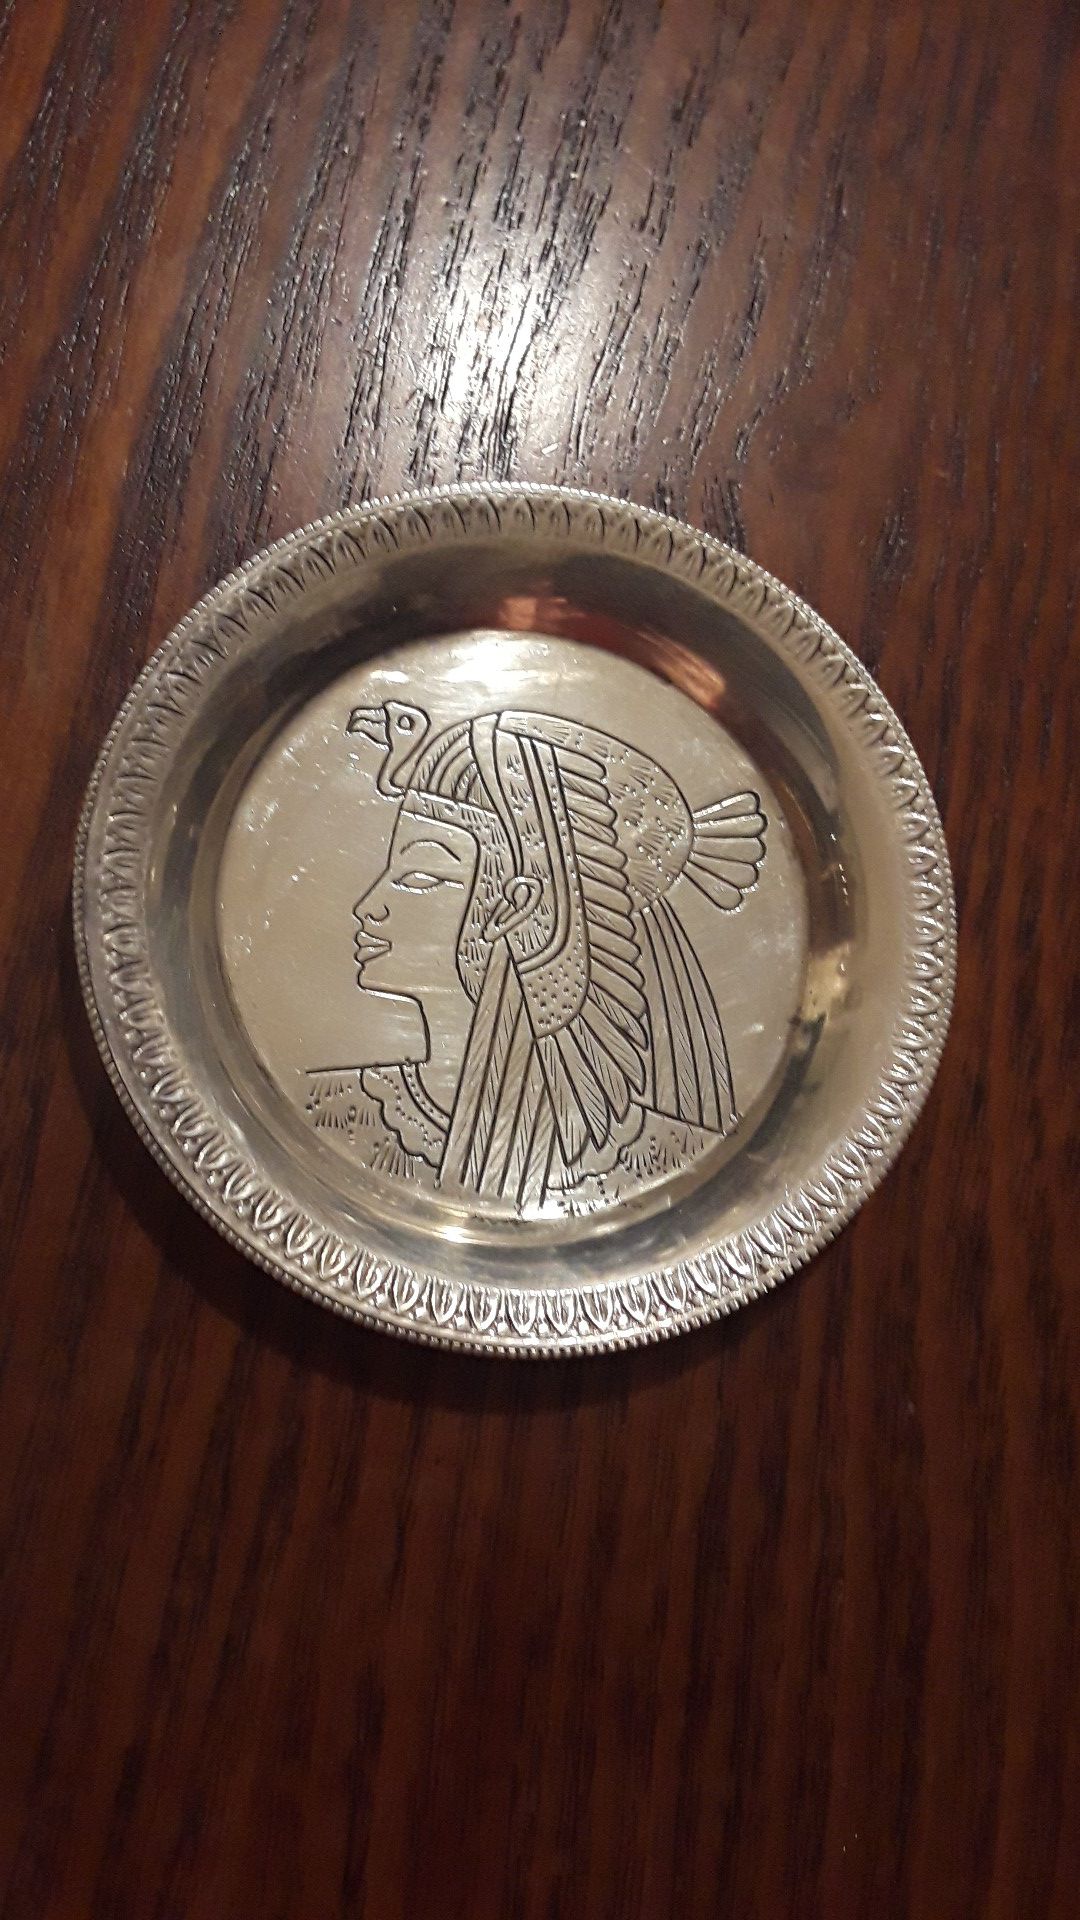 Gorgeous miniature Sterling Silver 925 decorative saucer. 3" diameter. Excellent condition.